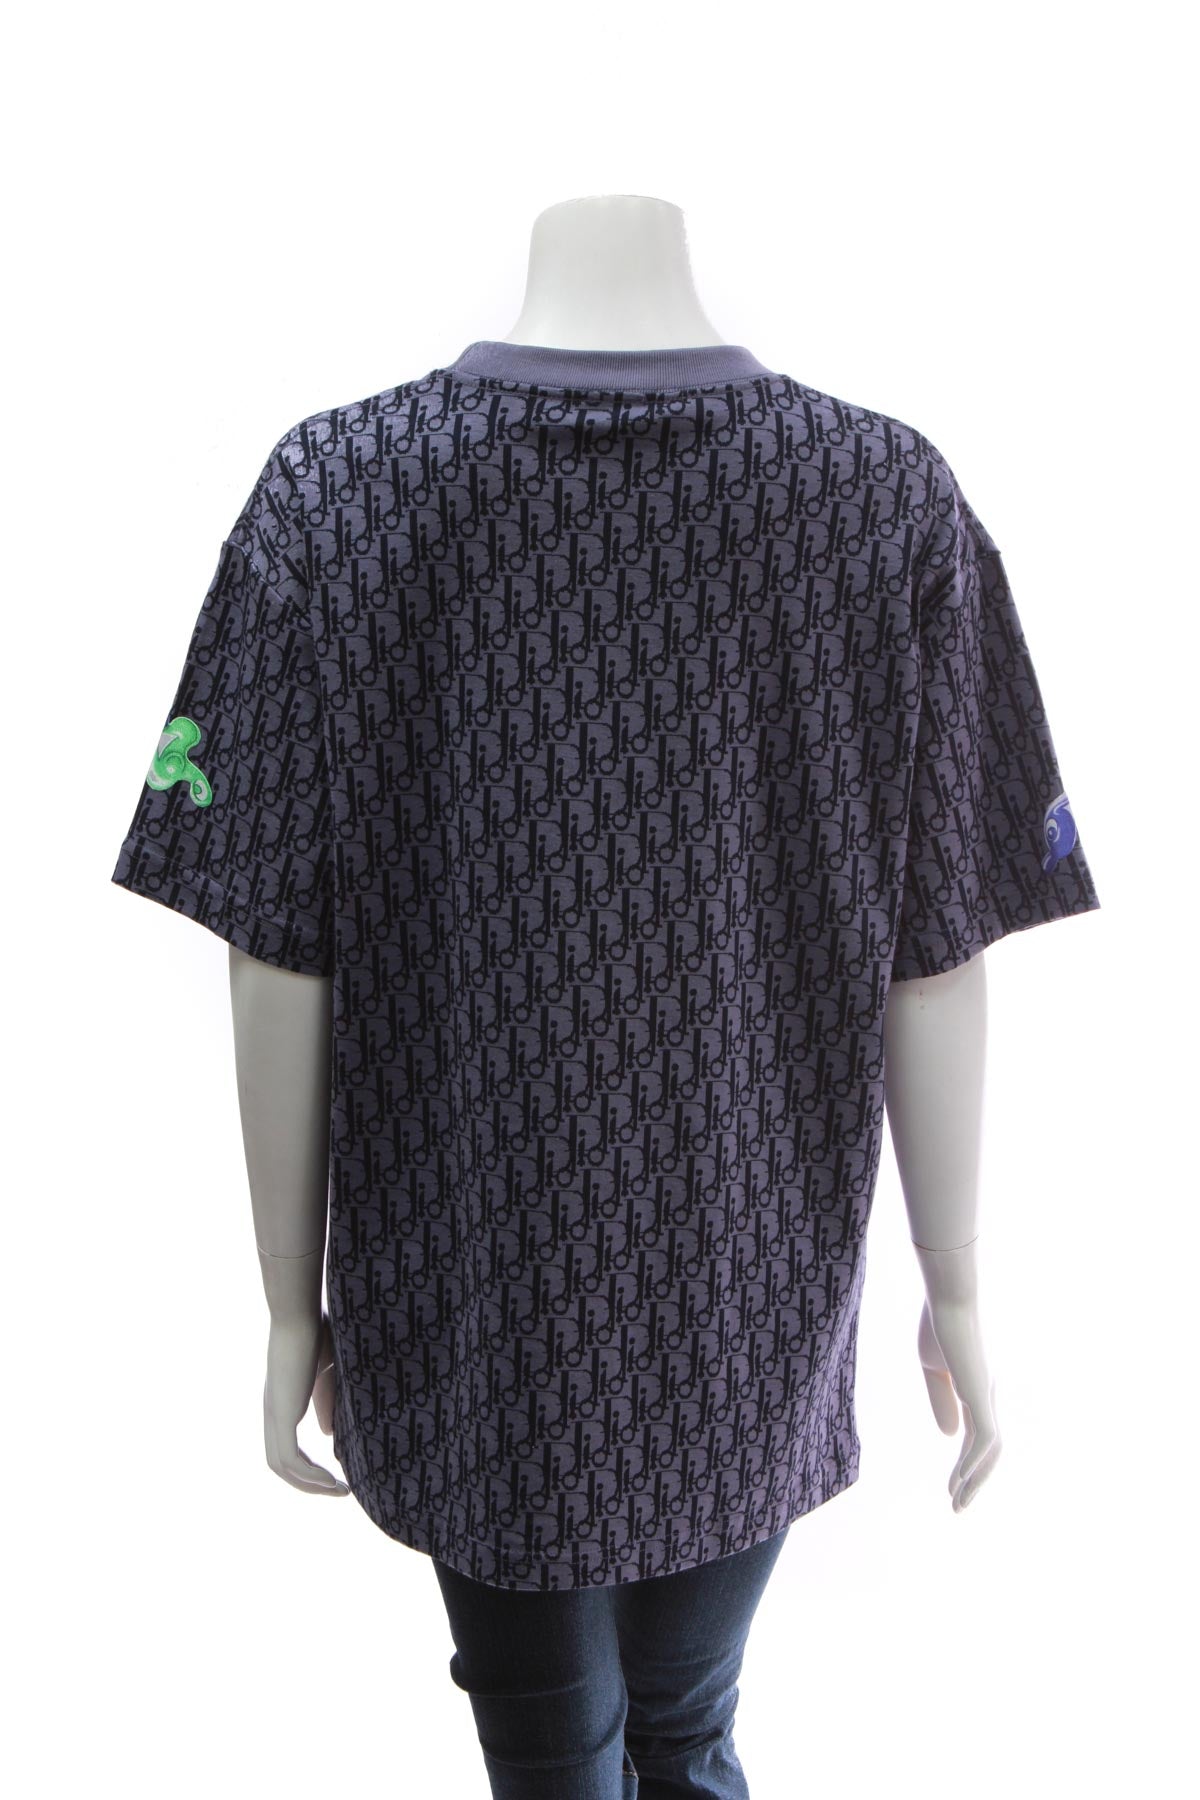 Louis Vuitton Monogram Cotton T Shirt Men Size XXL